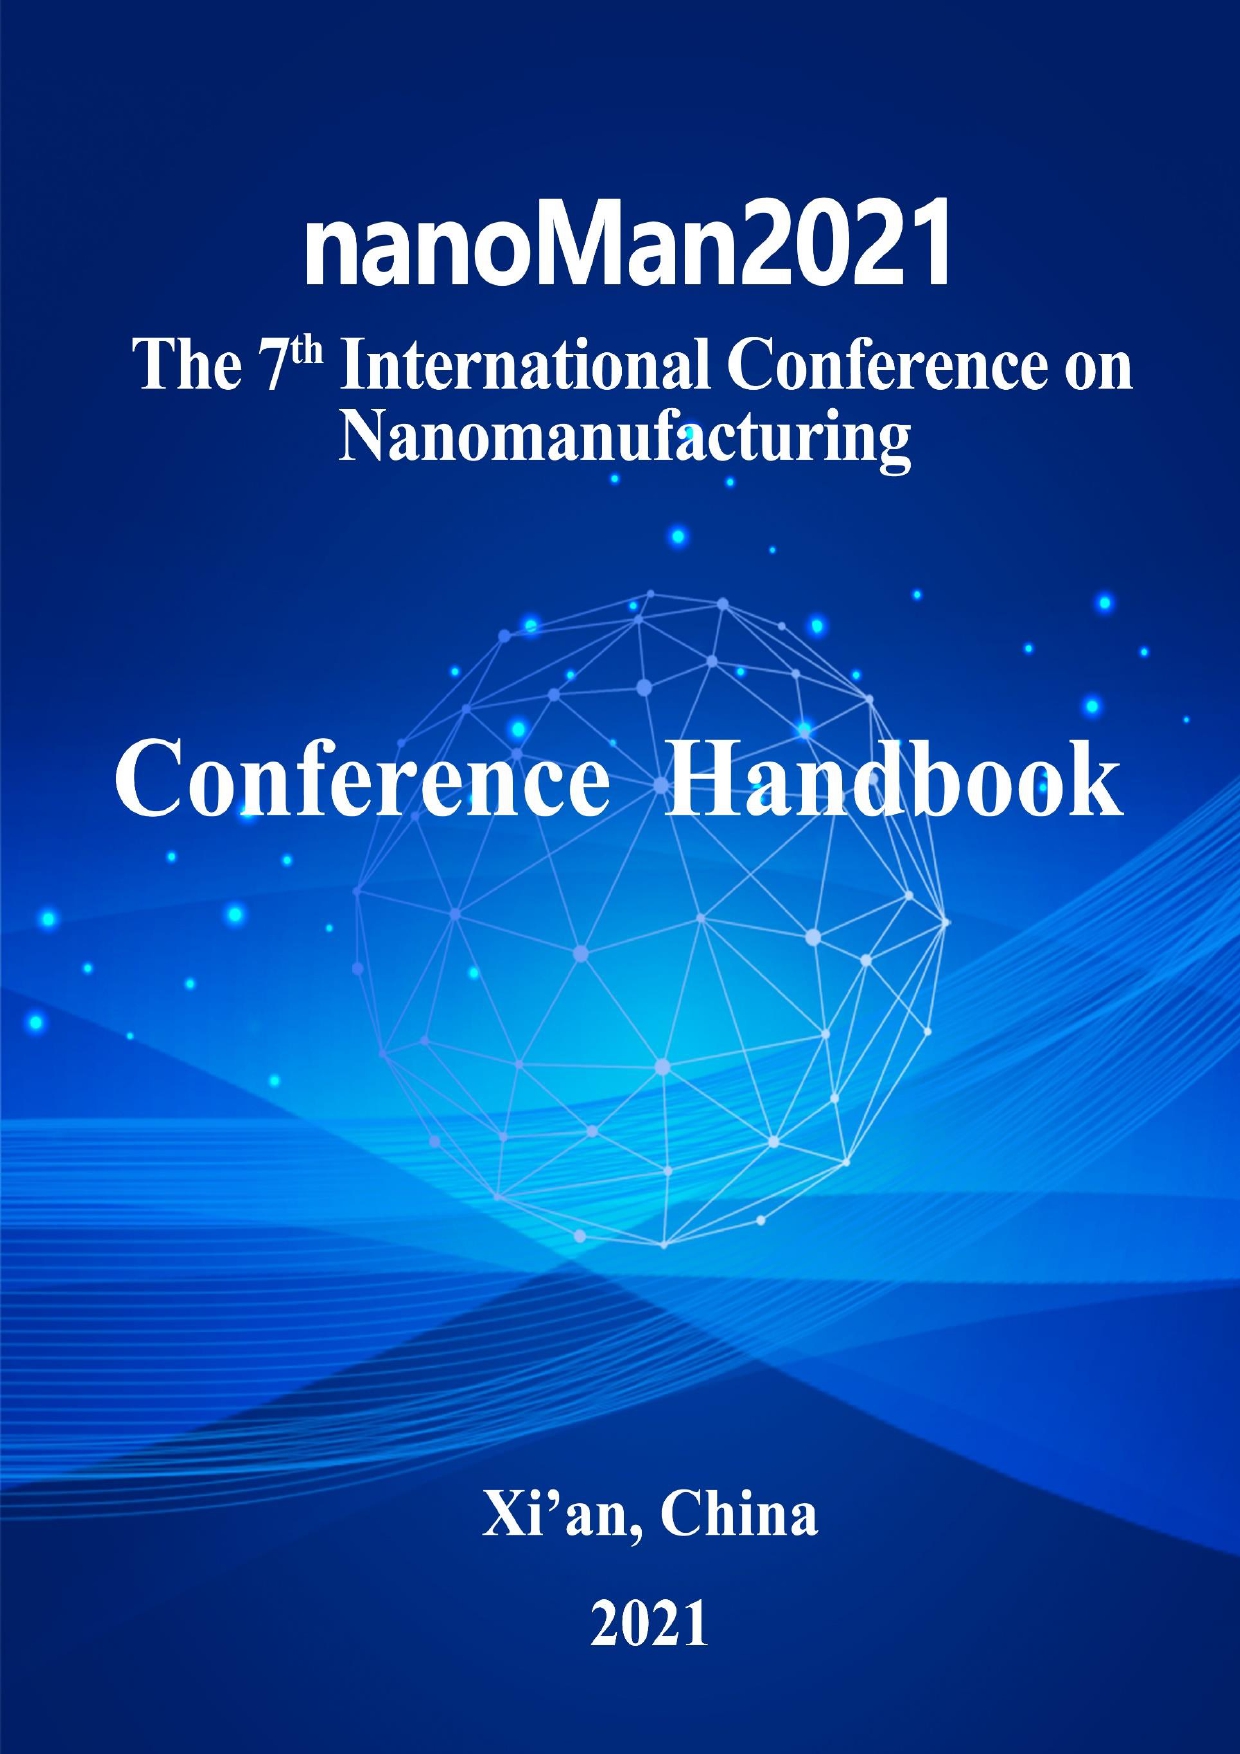 nanoMan2021Conference Handbook11.16_page-0001.jpg